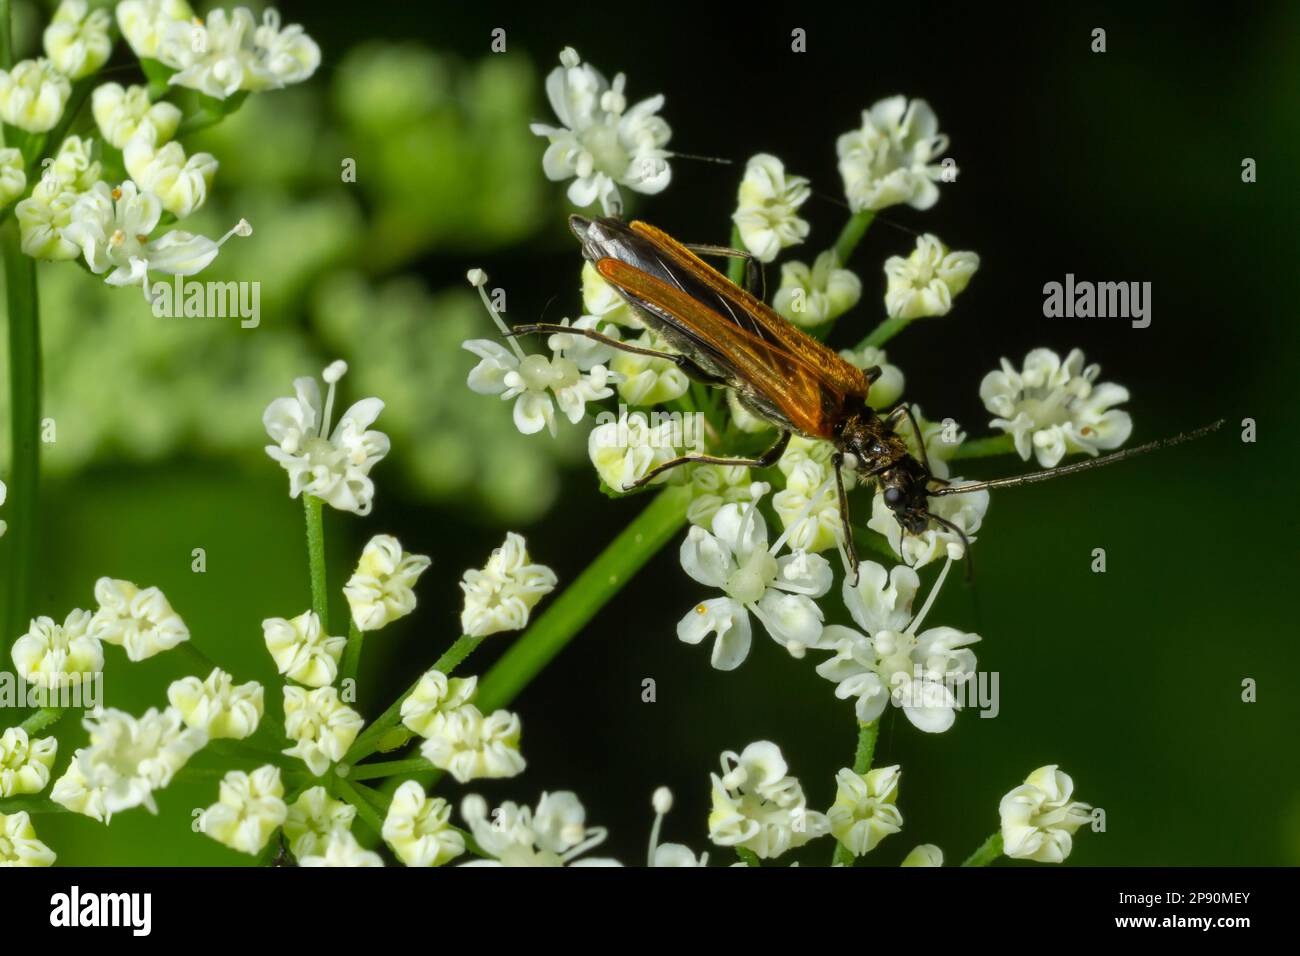 A male swollen thighed flower beetle, Oedemera nobilis, seen on an ox-eye daisy flower. Stock Photo